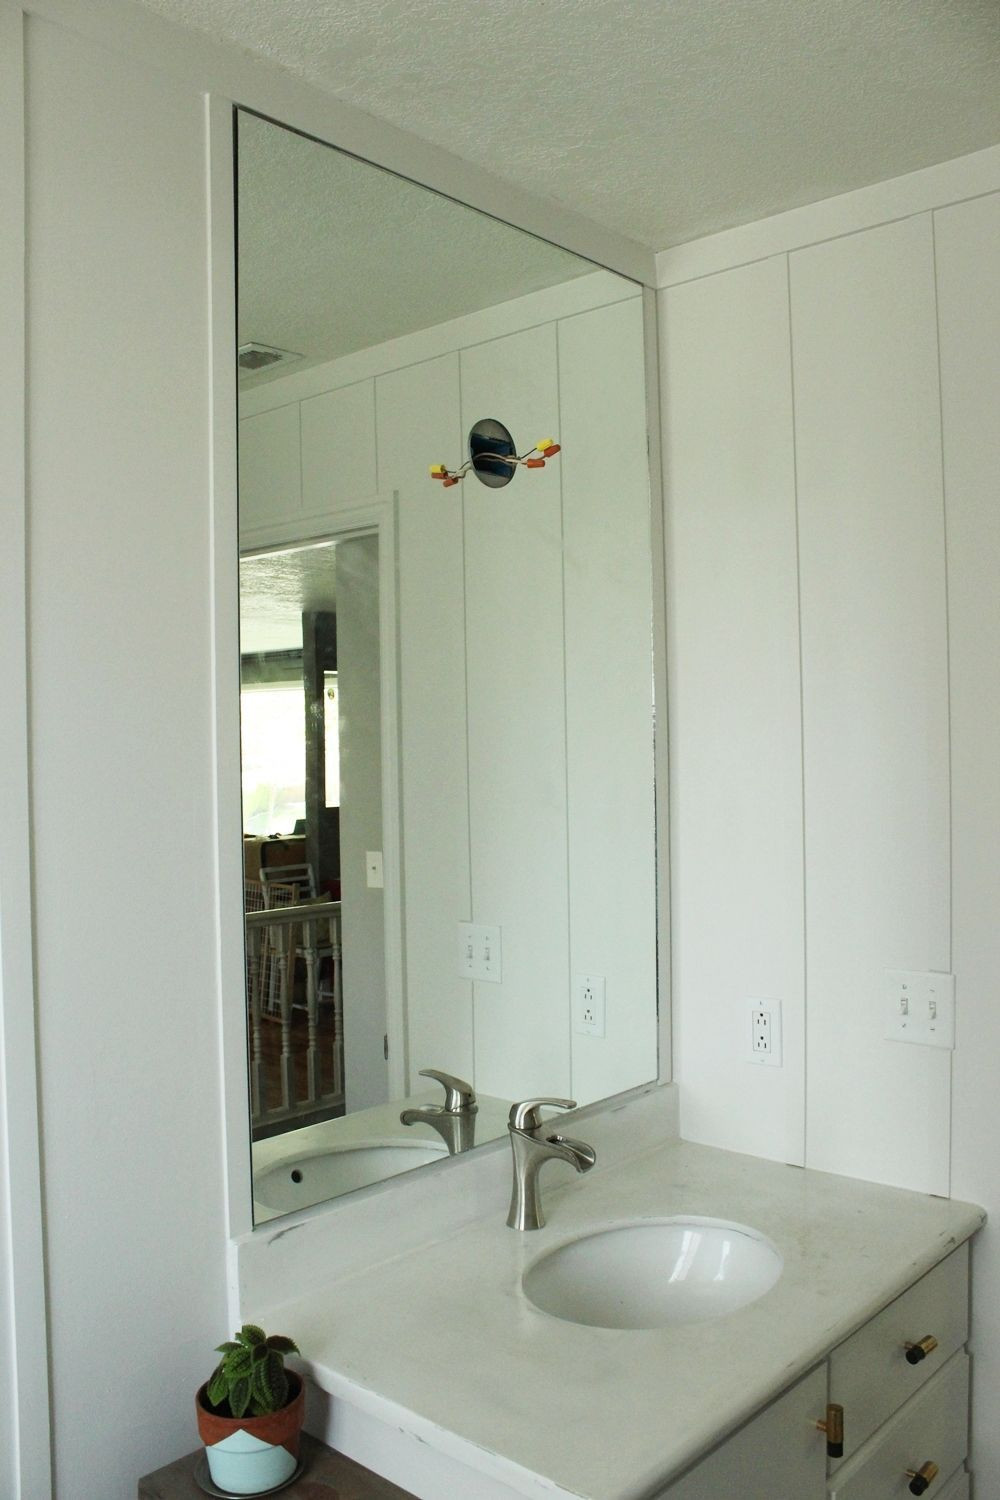 Bathroom Mirror Installation
 How to Professionally Install a Bathroom Mirror